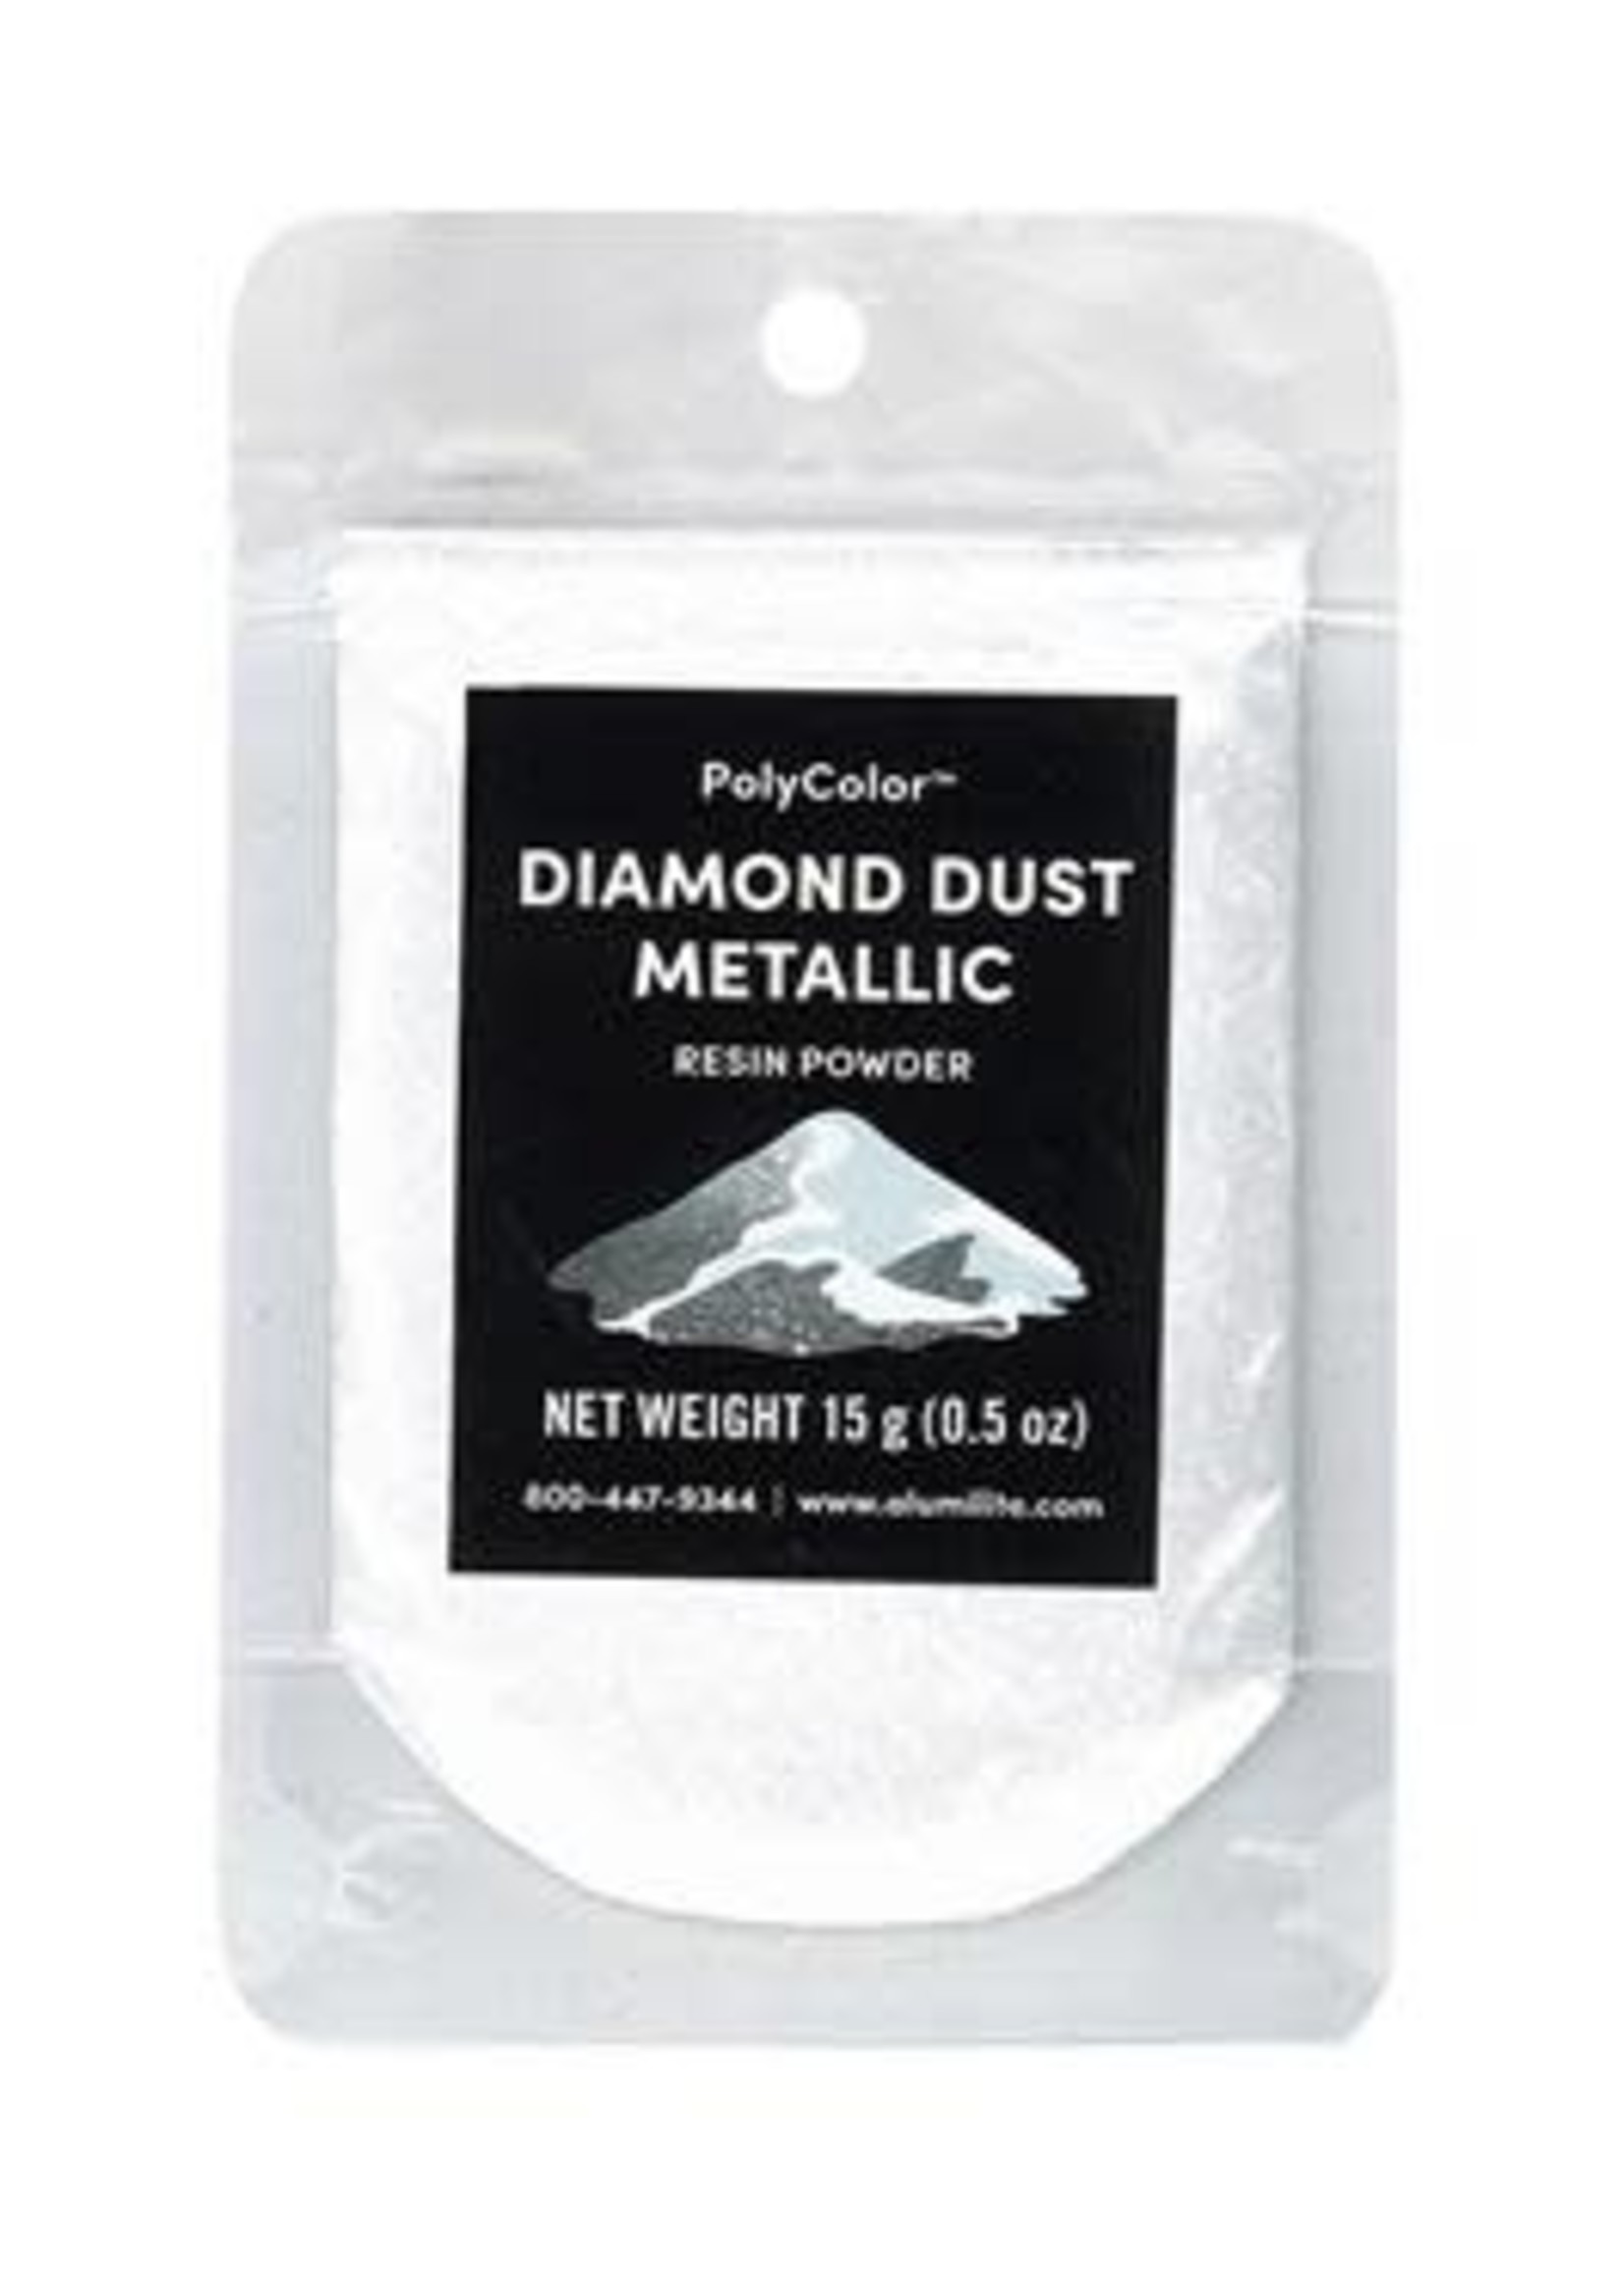 Alumilite PolyColor Resin Powder 1⁄2oz Diamond Dust Metallic